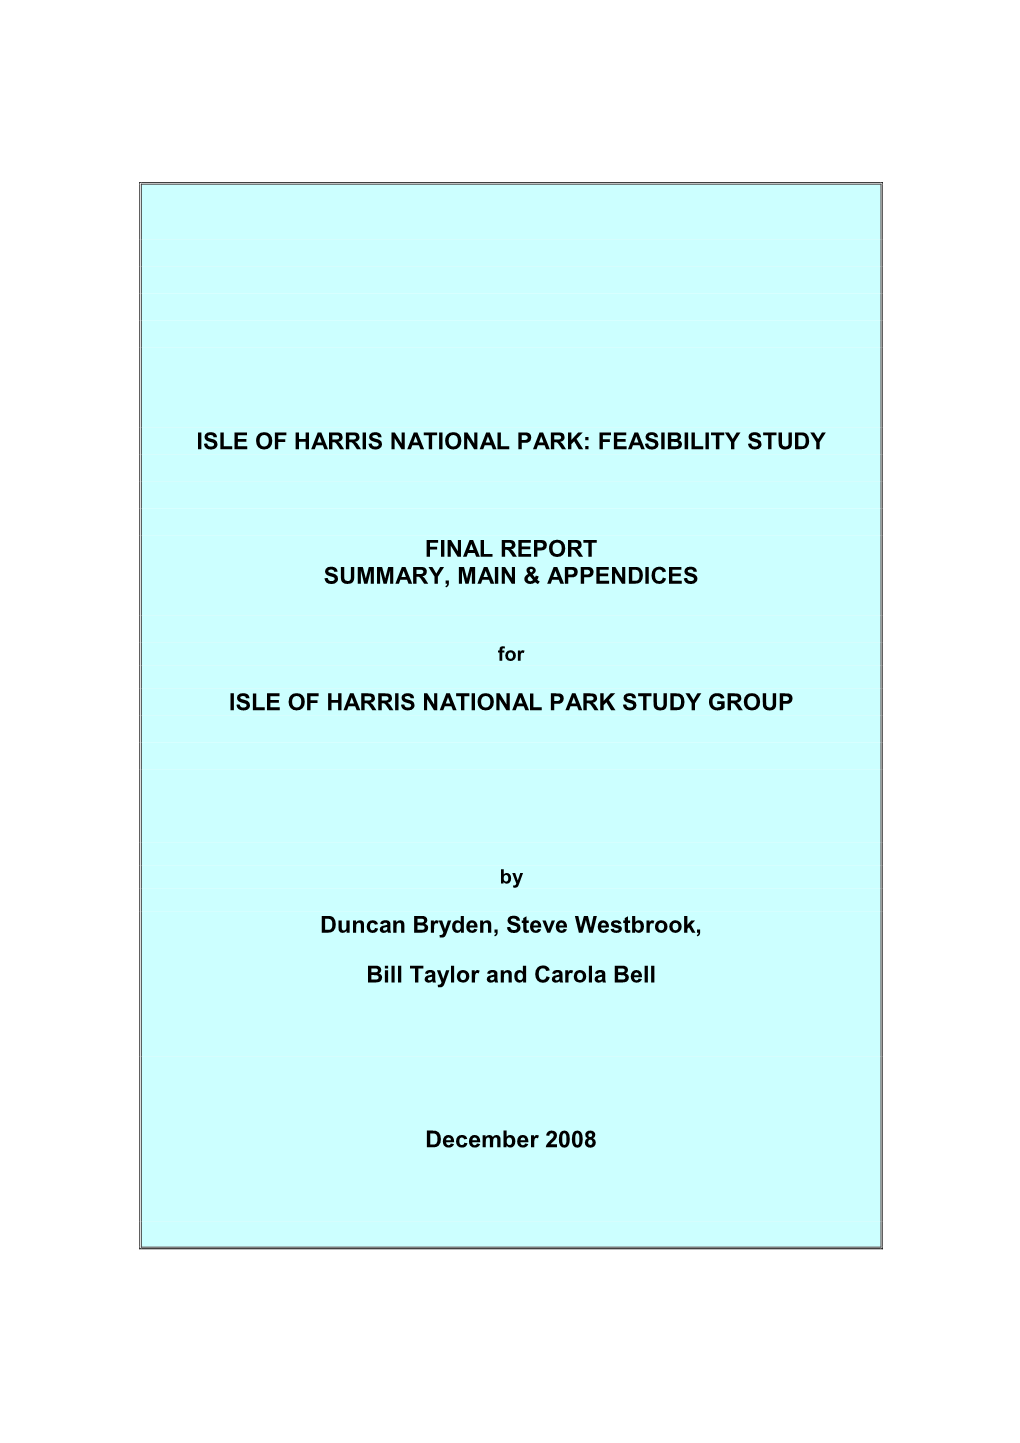 Isle of Harris National Park Feasibility Study